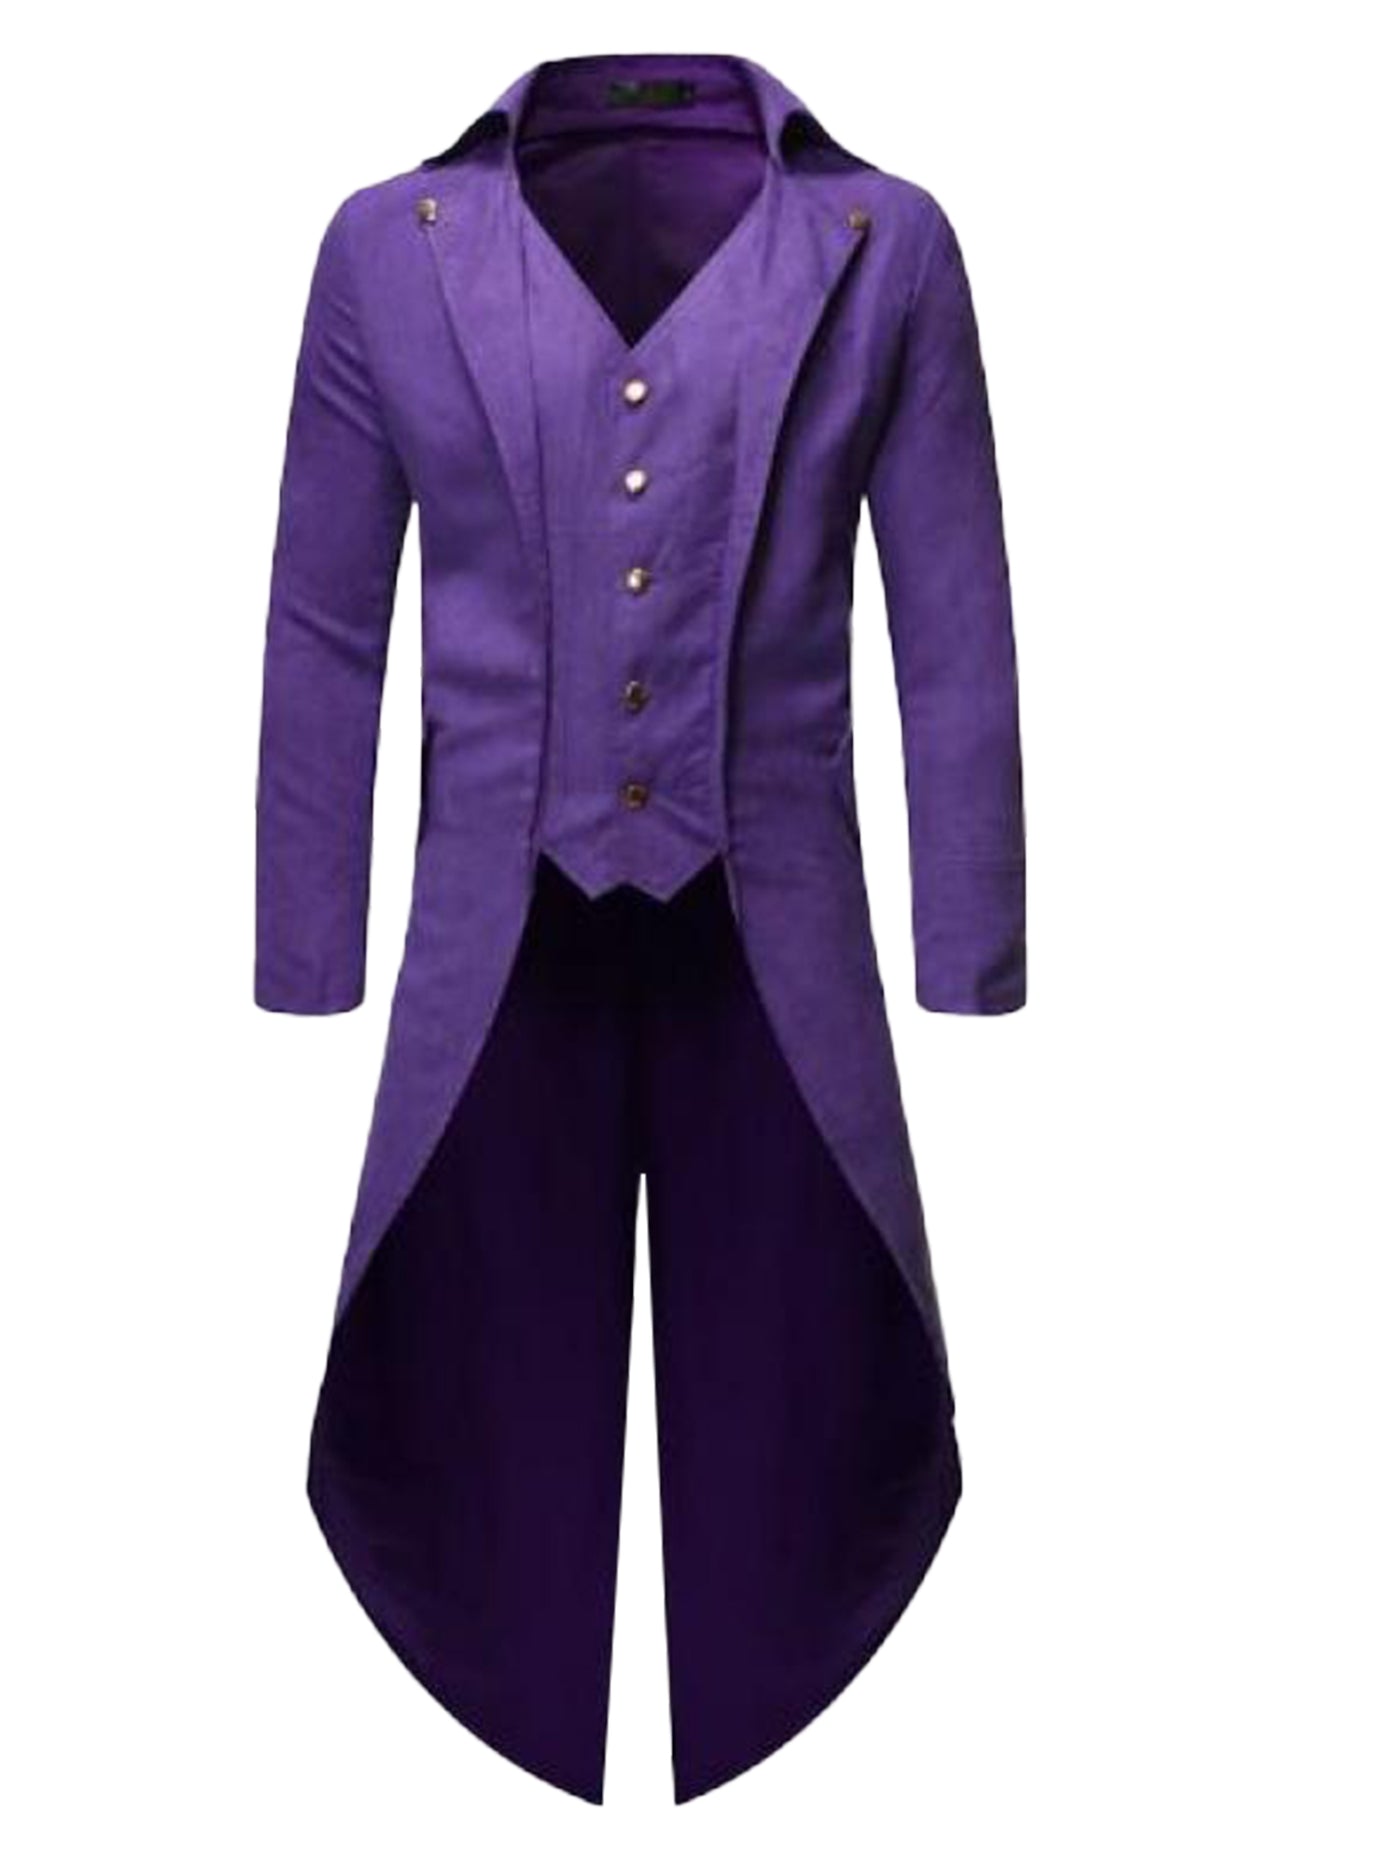 Bublédon Costume Tuxedo for Men's Button Down Vintage Steampunk Jacket Prom Tailcoat